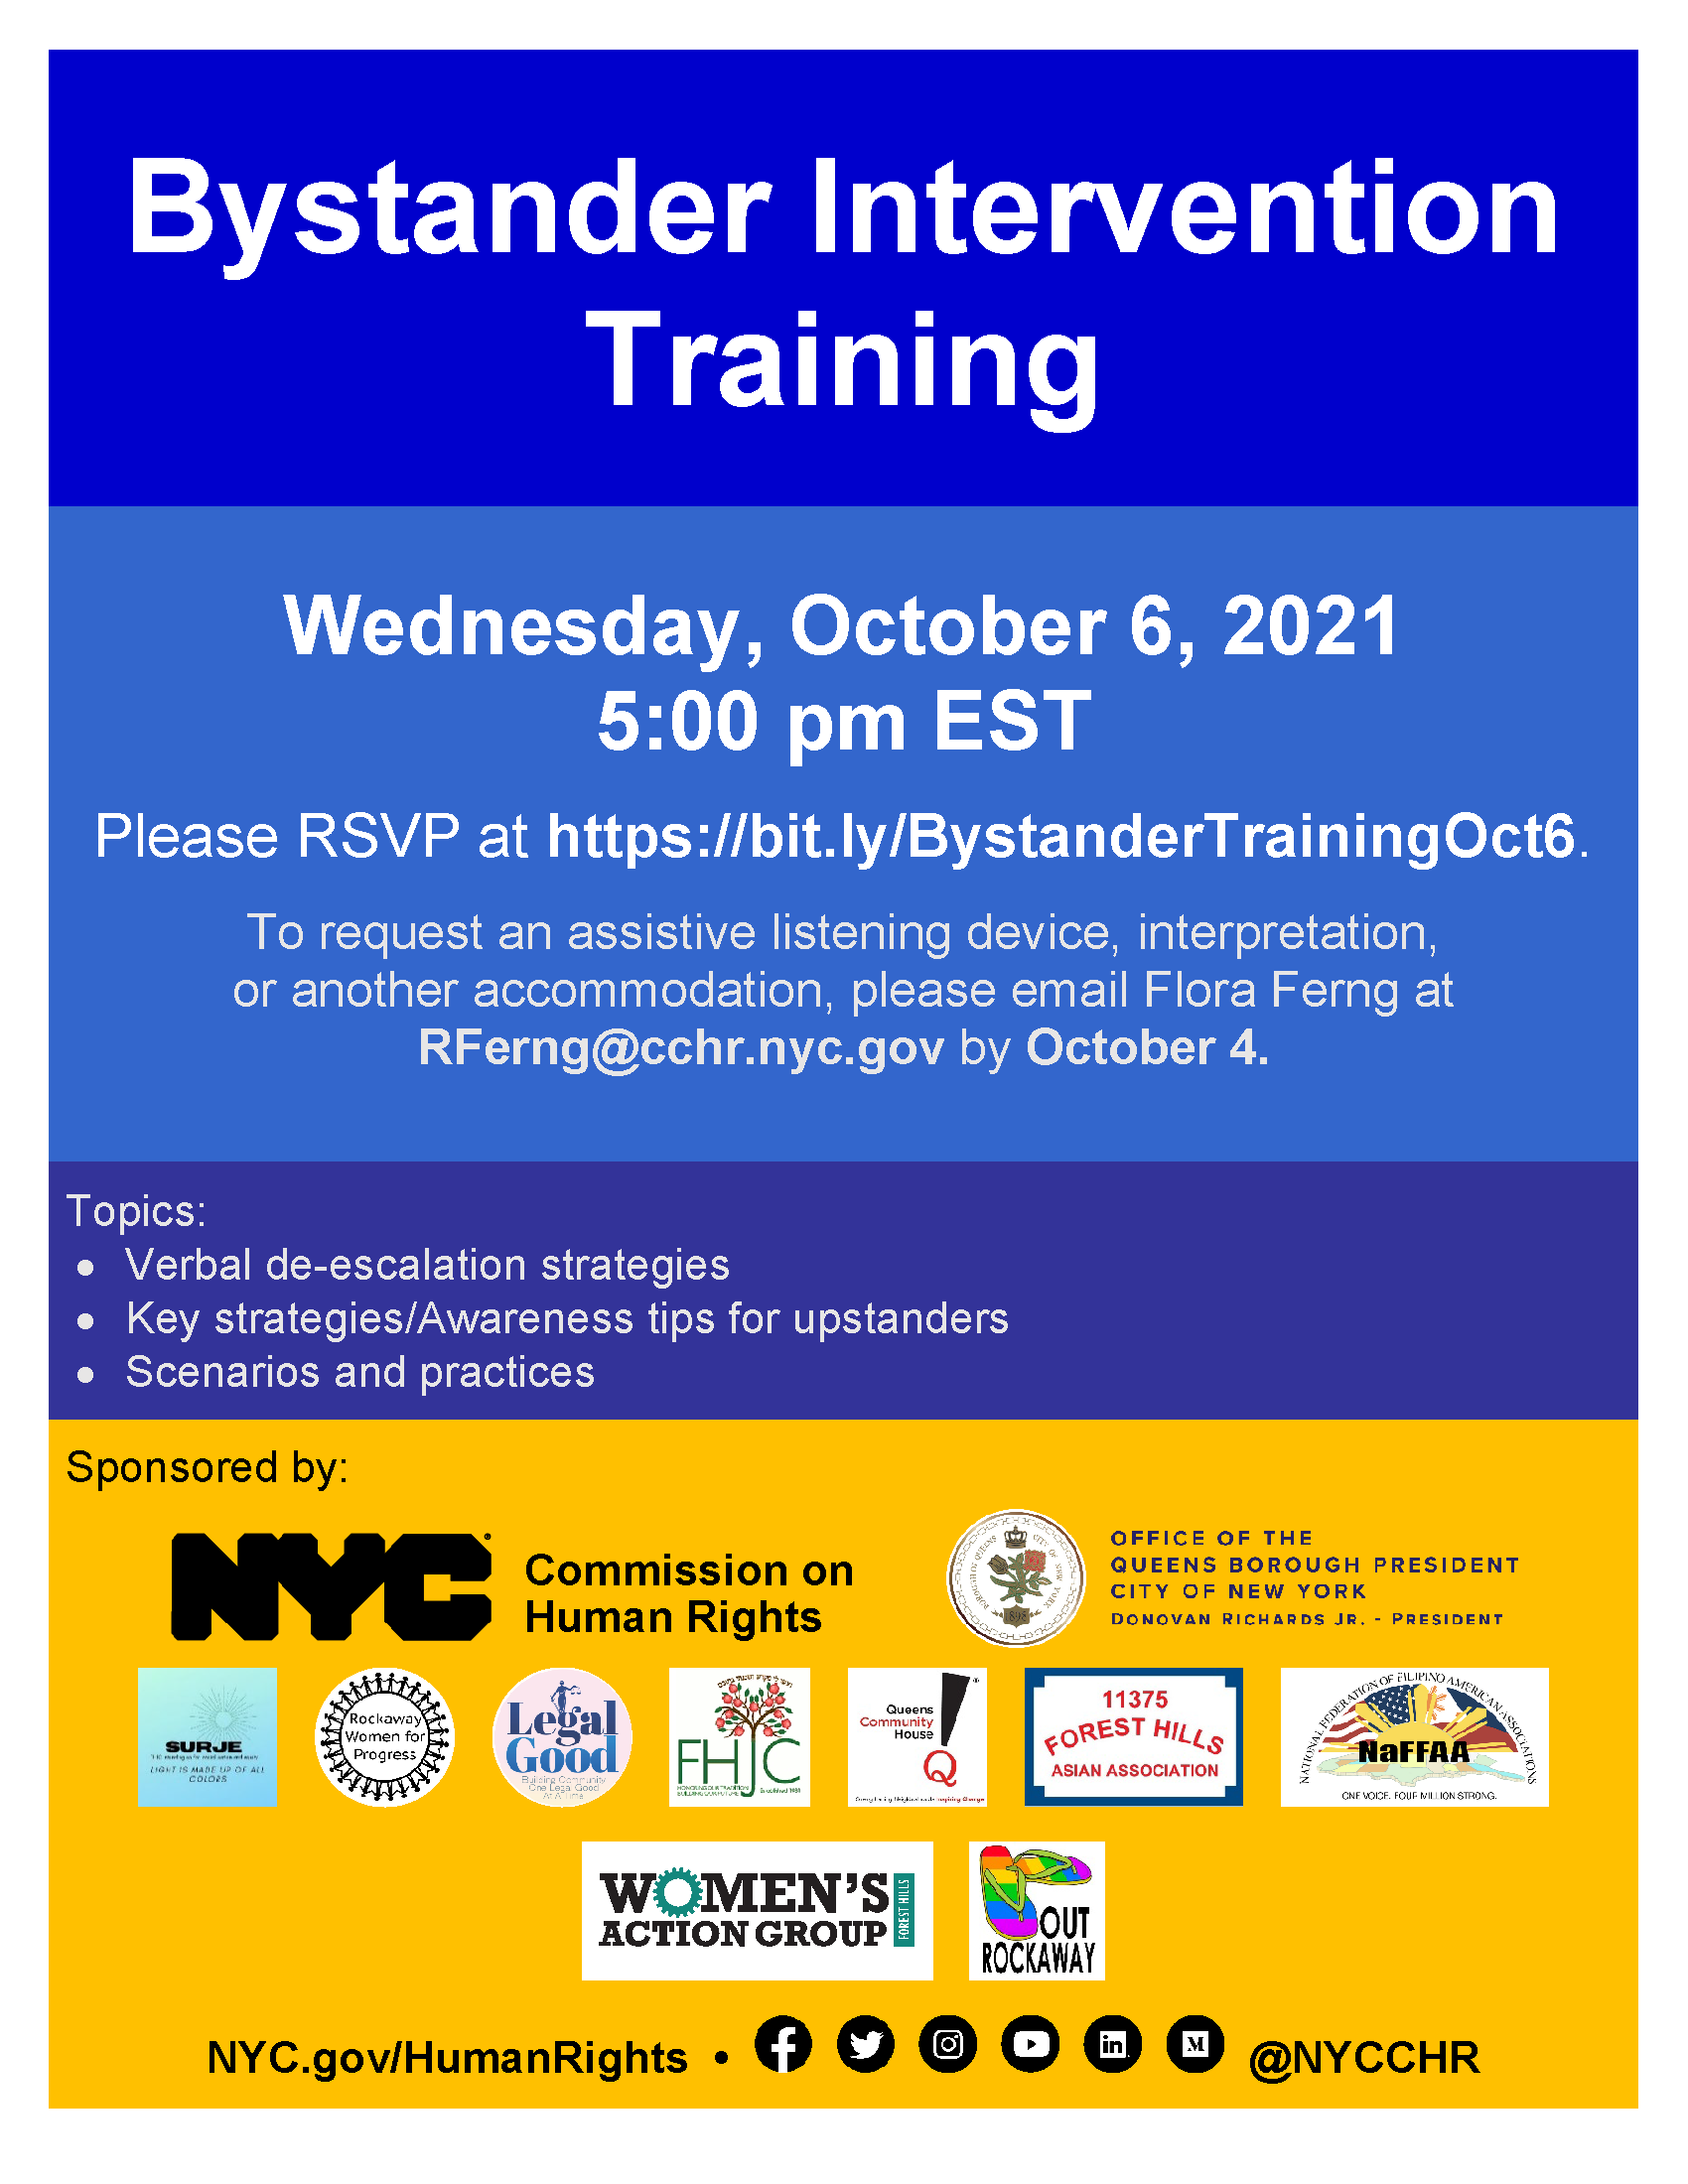 Bystander Intervention Training @ online event